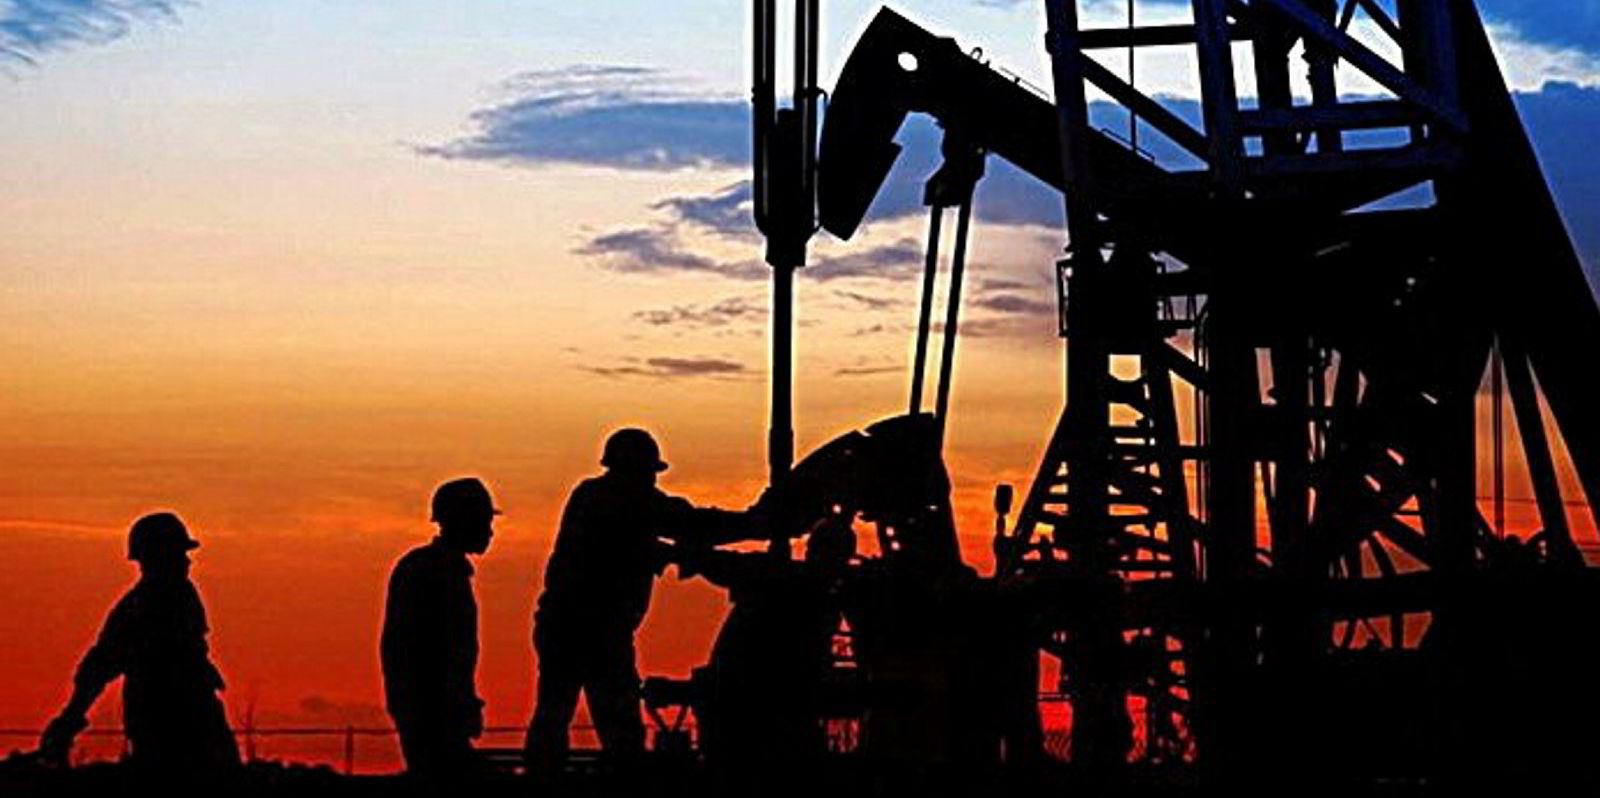 Angola sets date for key onshore oil blocks tender launch | Upstream Online